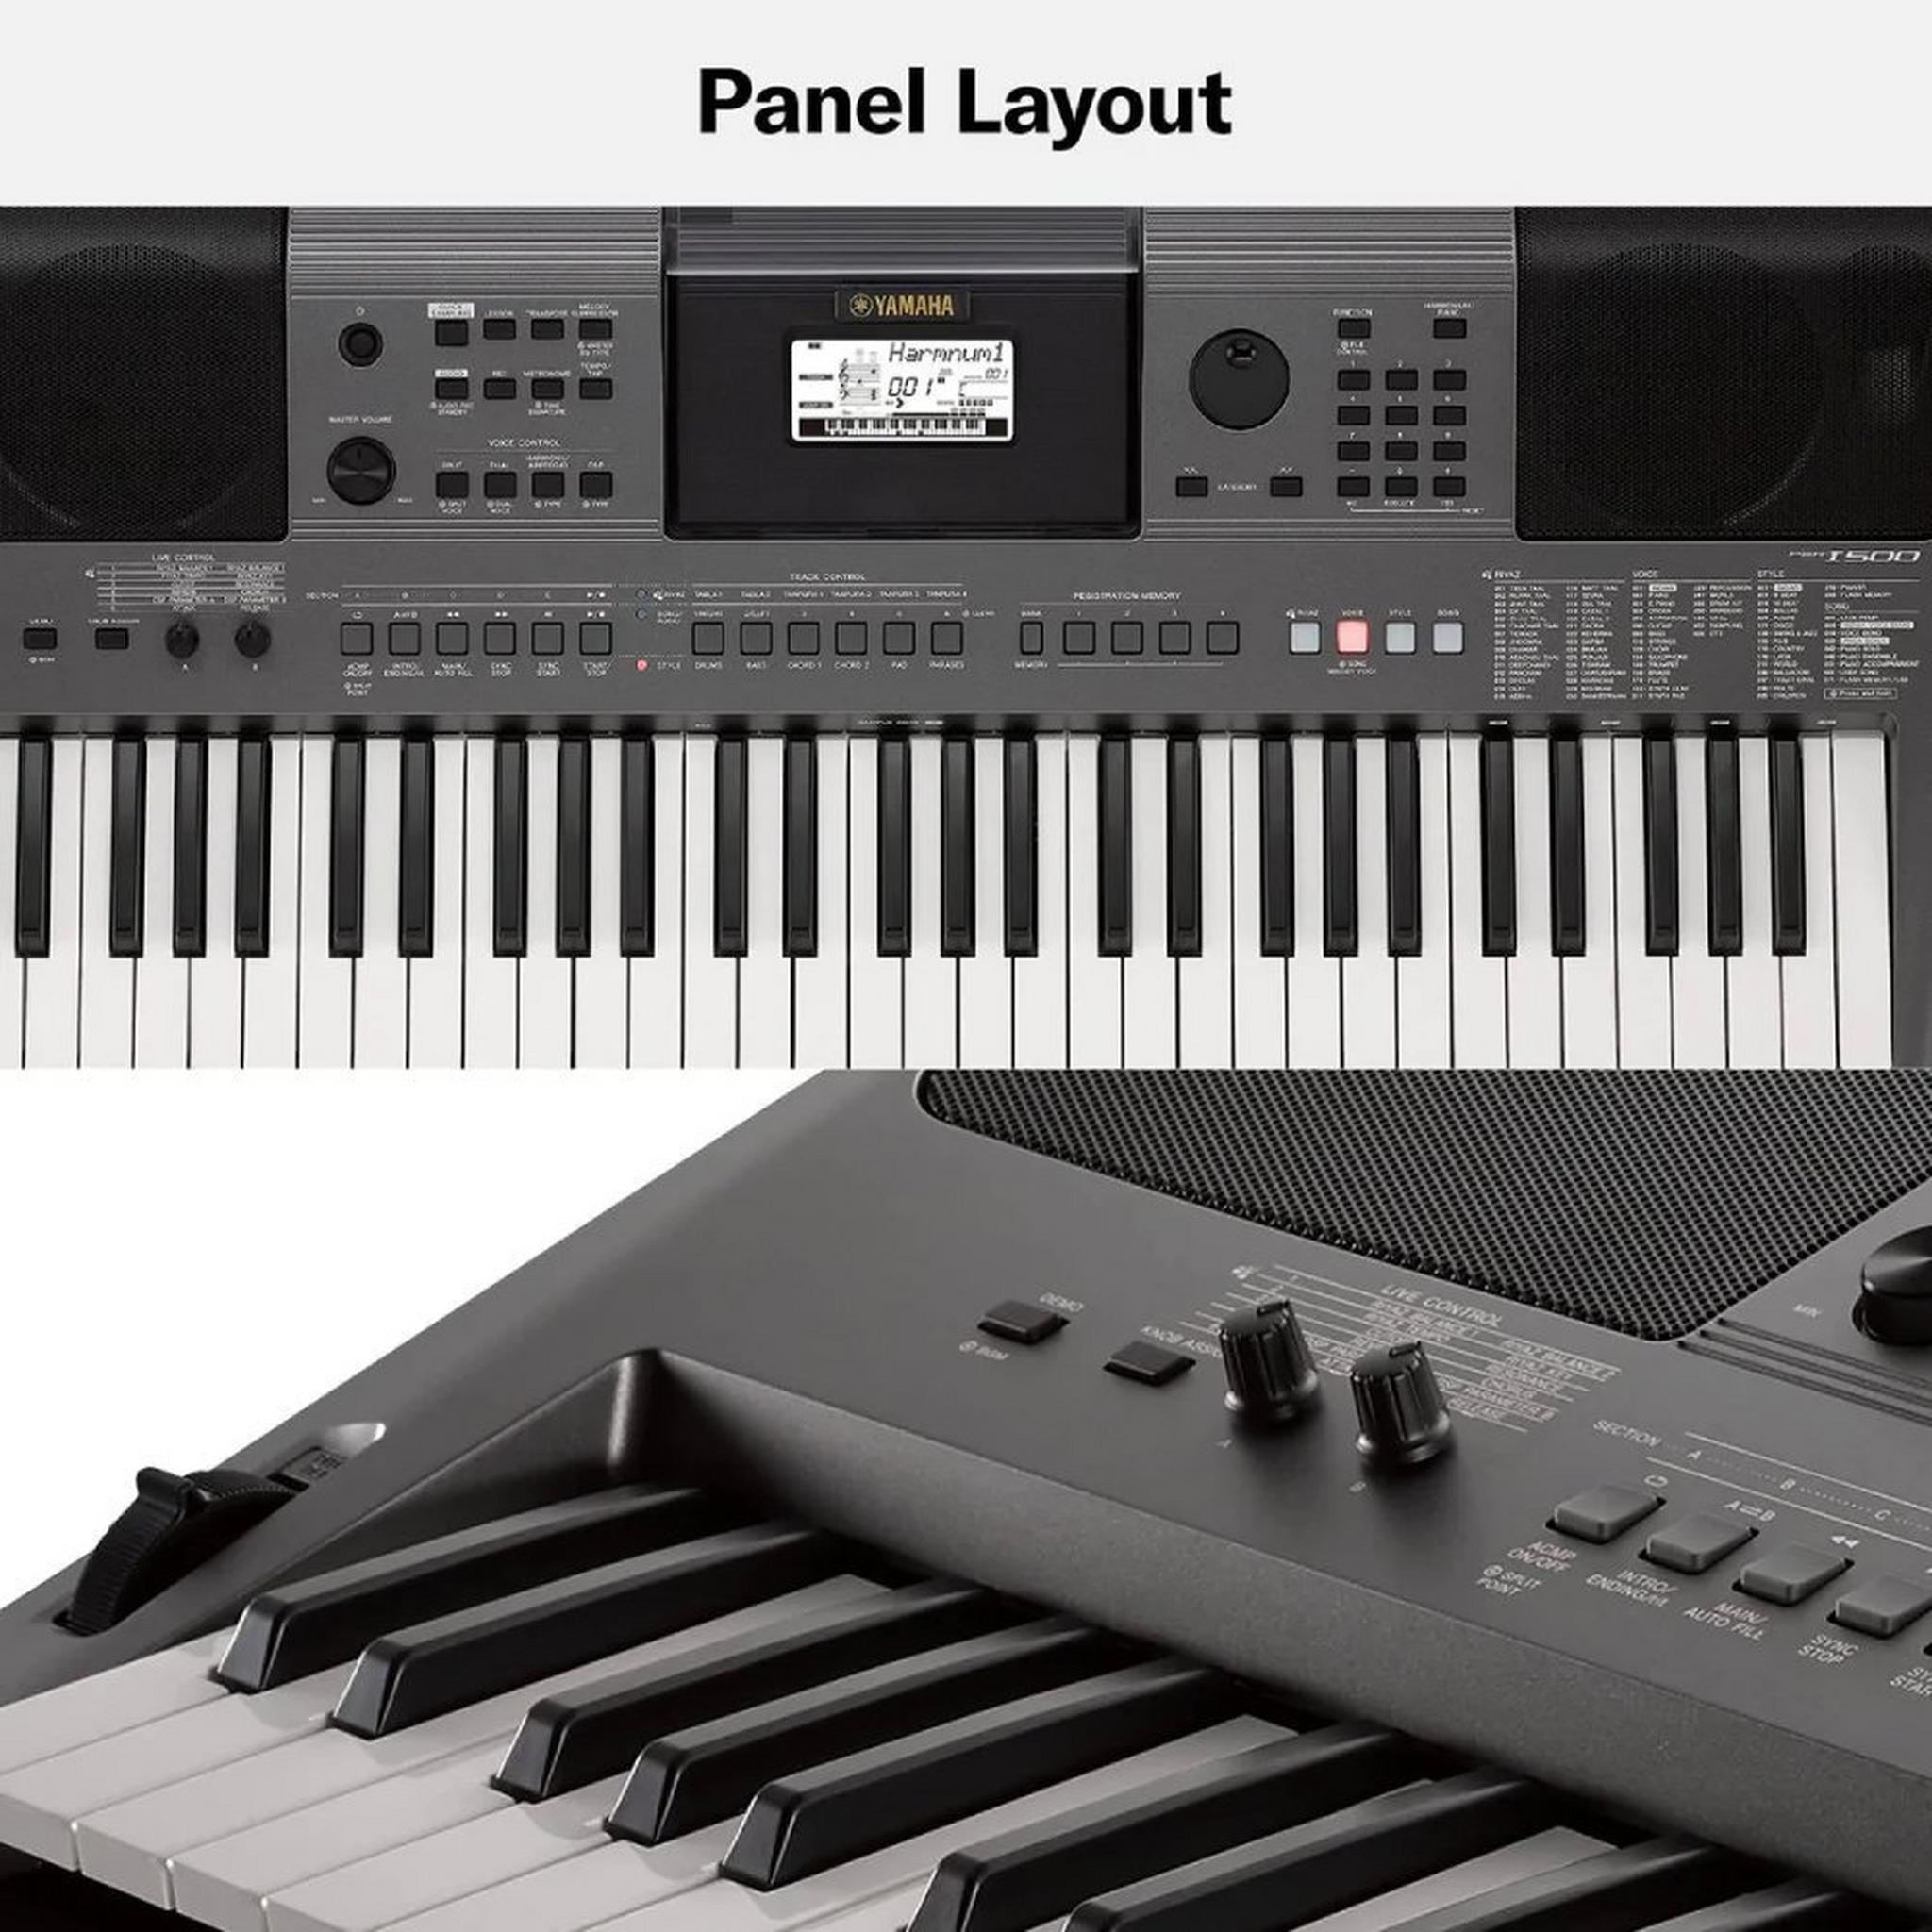 Yamaha Portable Keyboard 61 Keys (PSR-I500) Indian